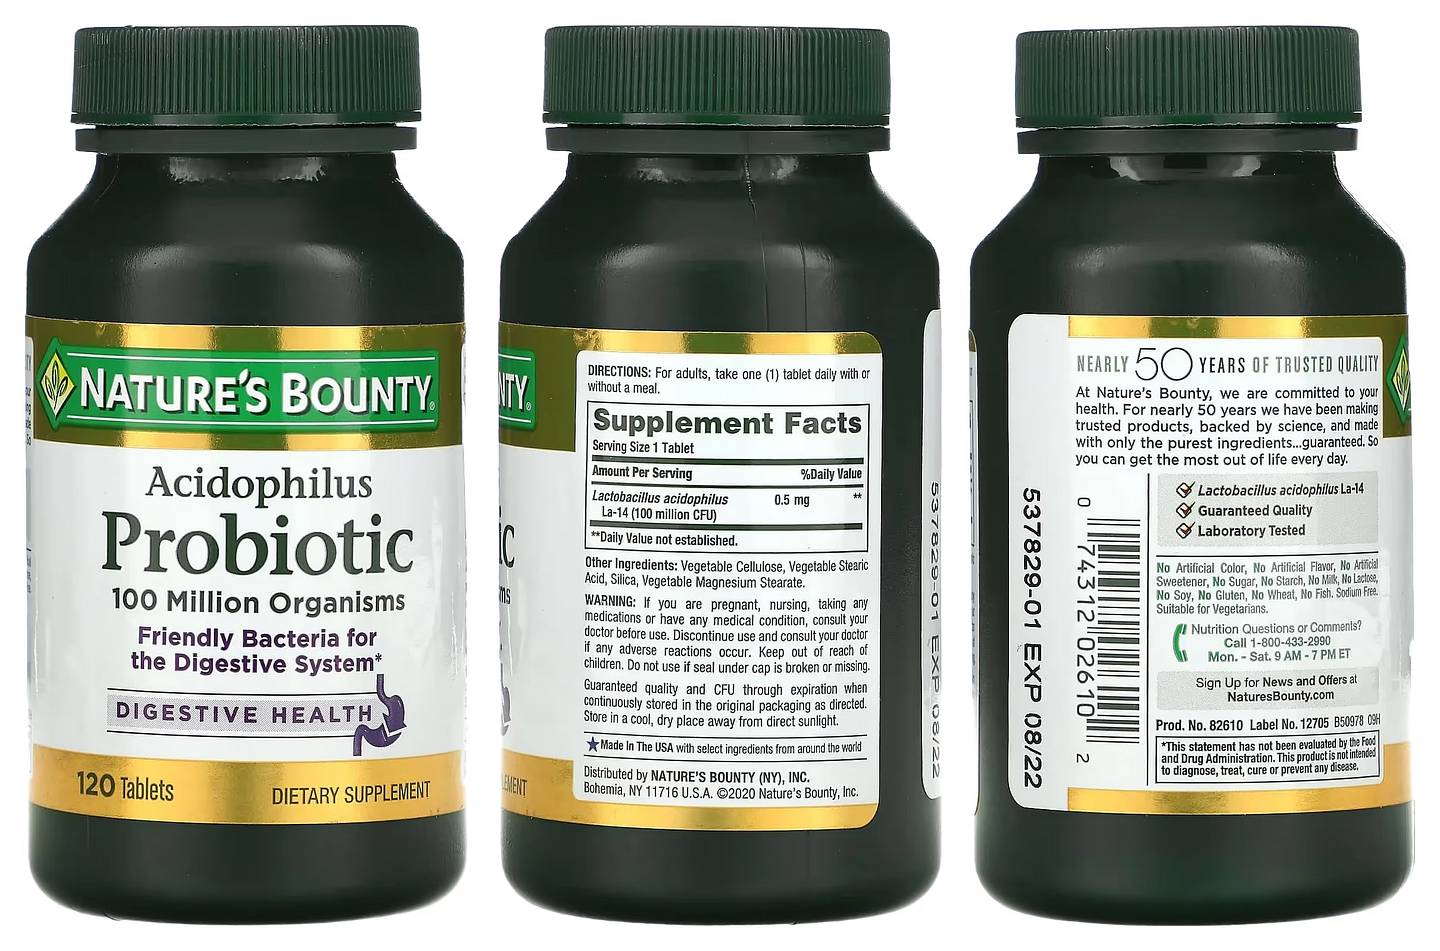 Nature's Bounty, Acidophilus Probiotic packaging